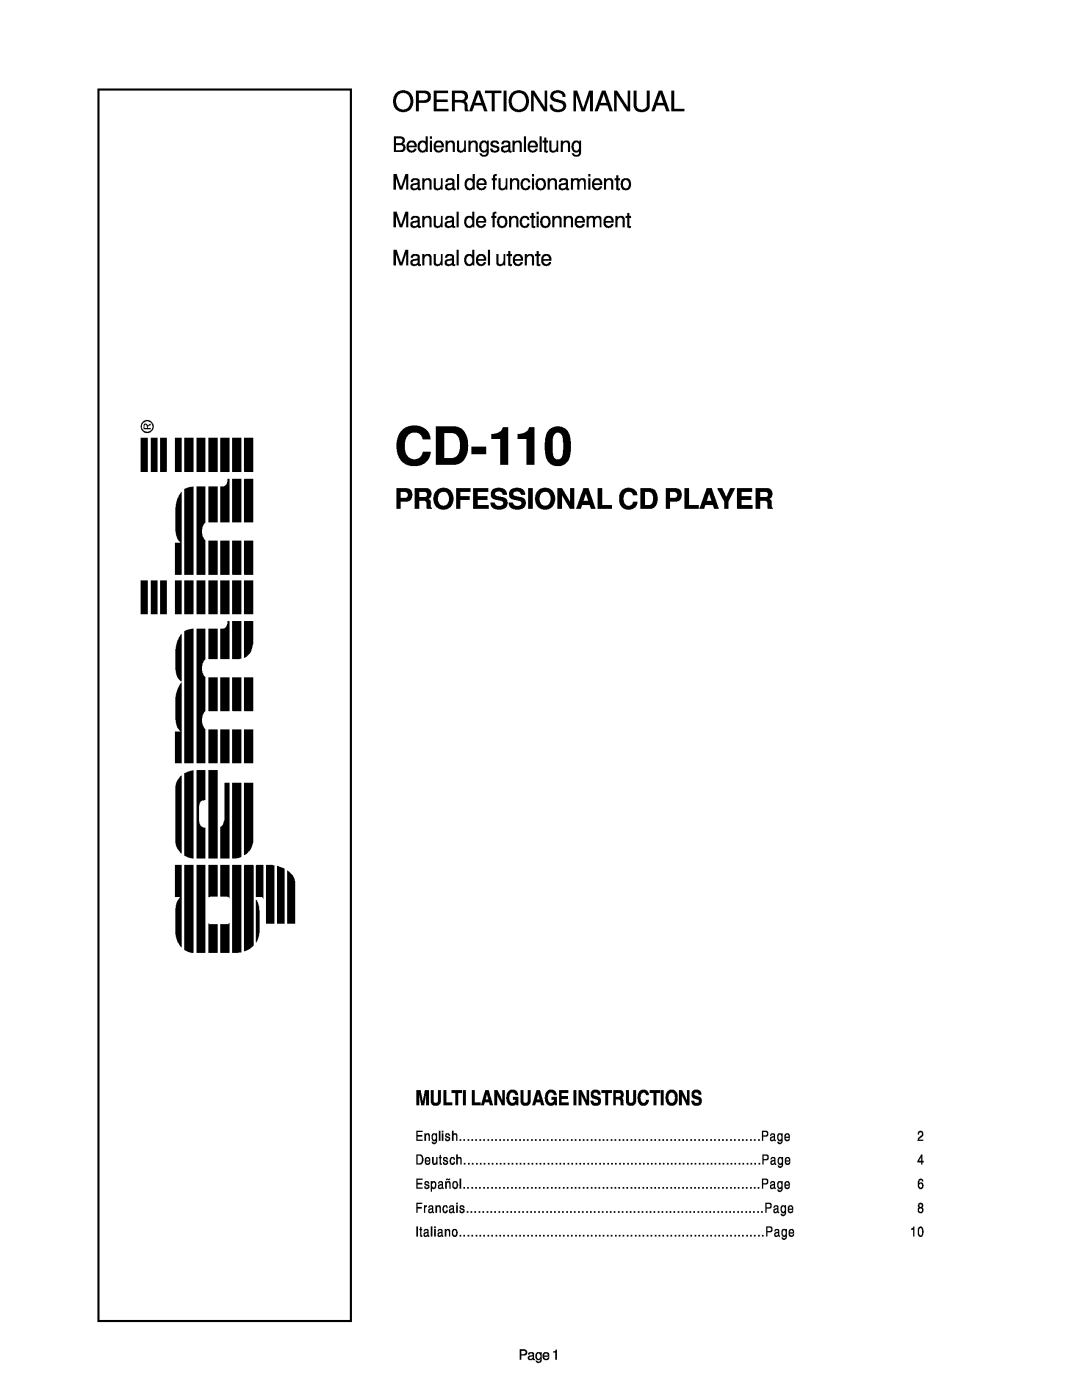 Gemini CD-110 manual Operations Manual, Professional Cd Player, Bedienungsanleltung Manual de funcionamiento 